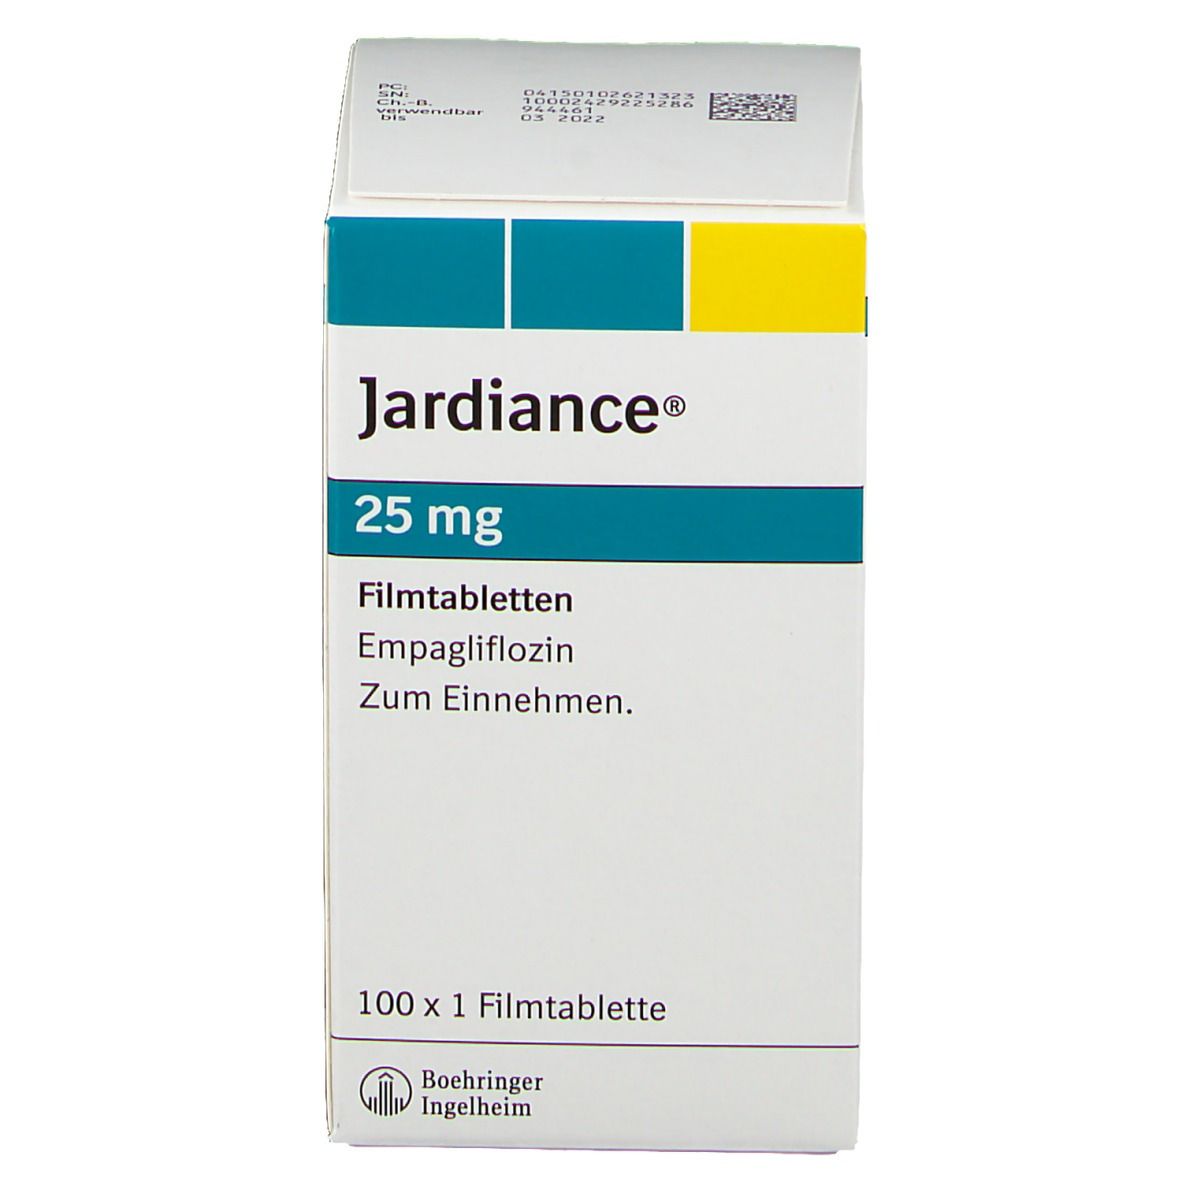 Jardiance® 25 mg